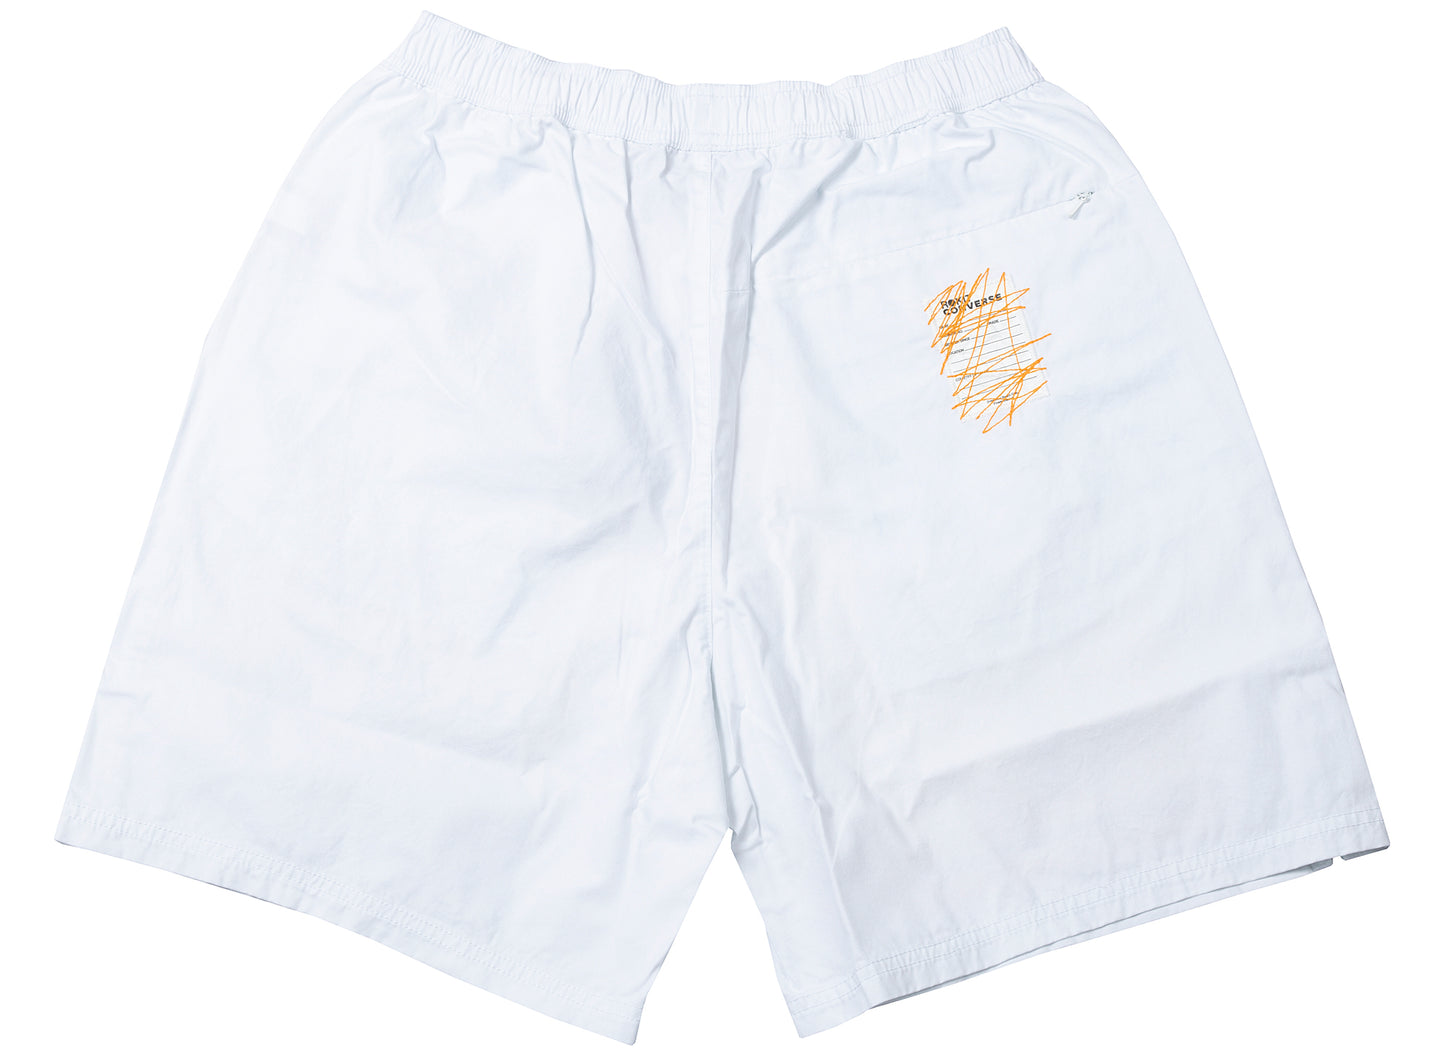 Rokit x Converse Shorts in White